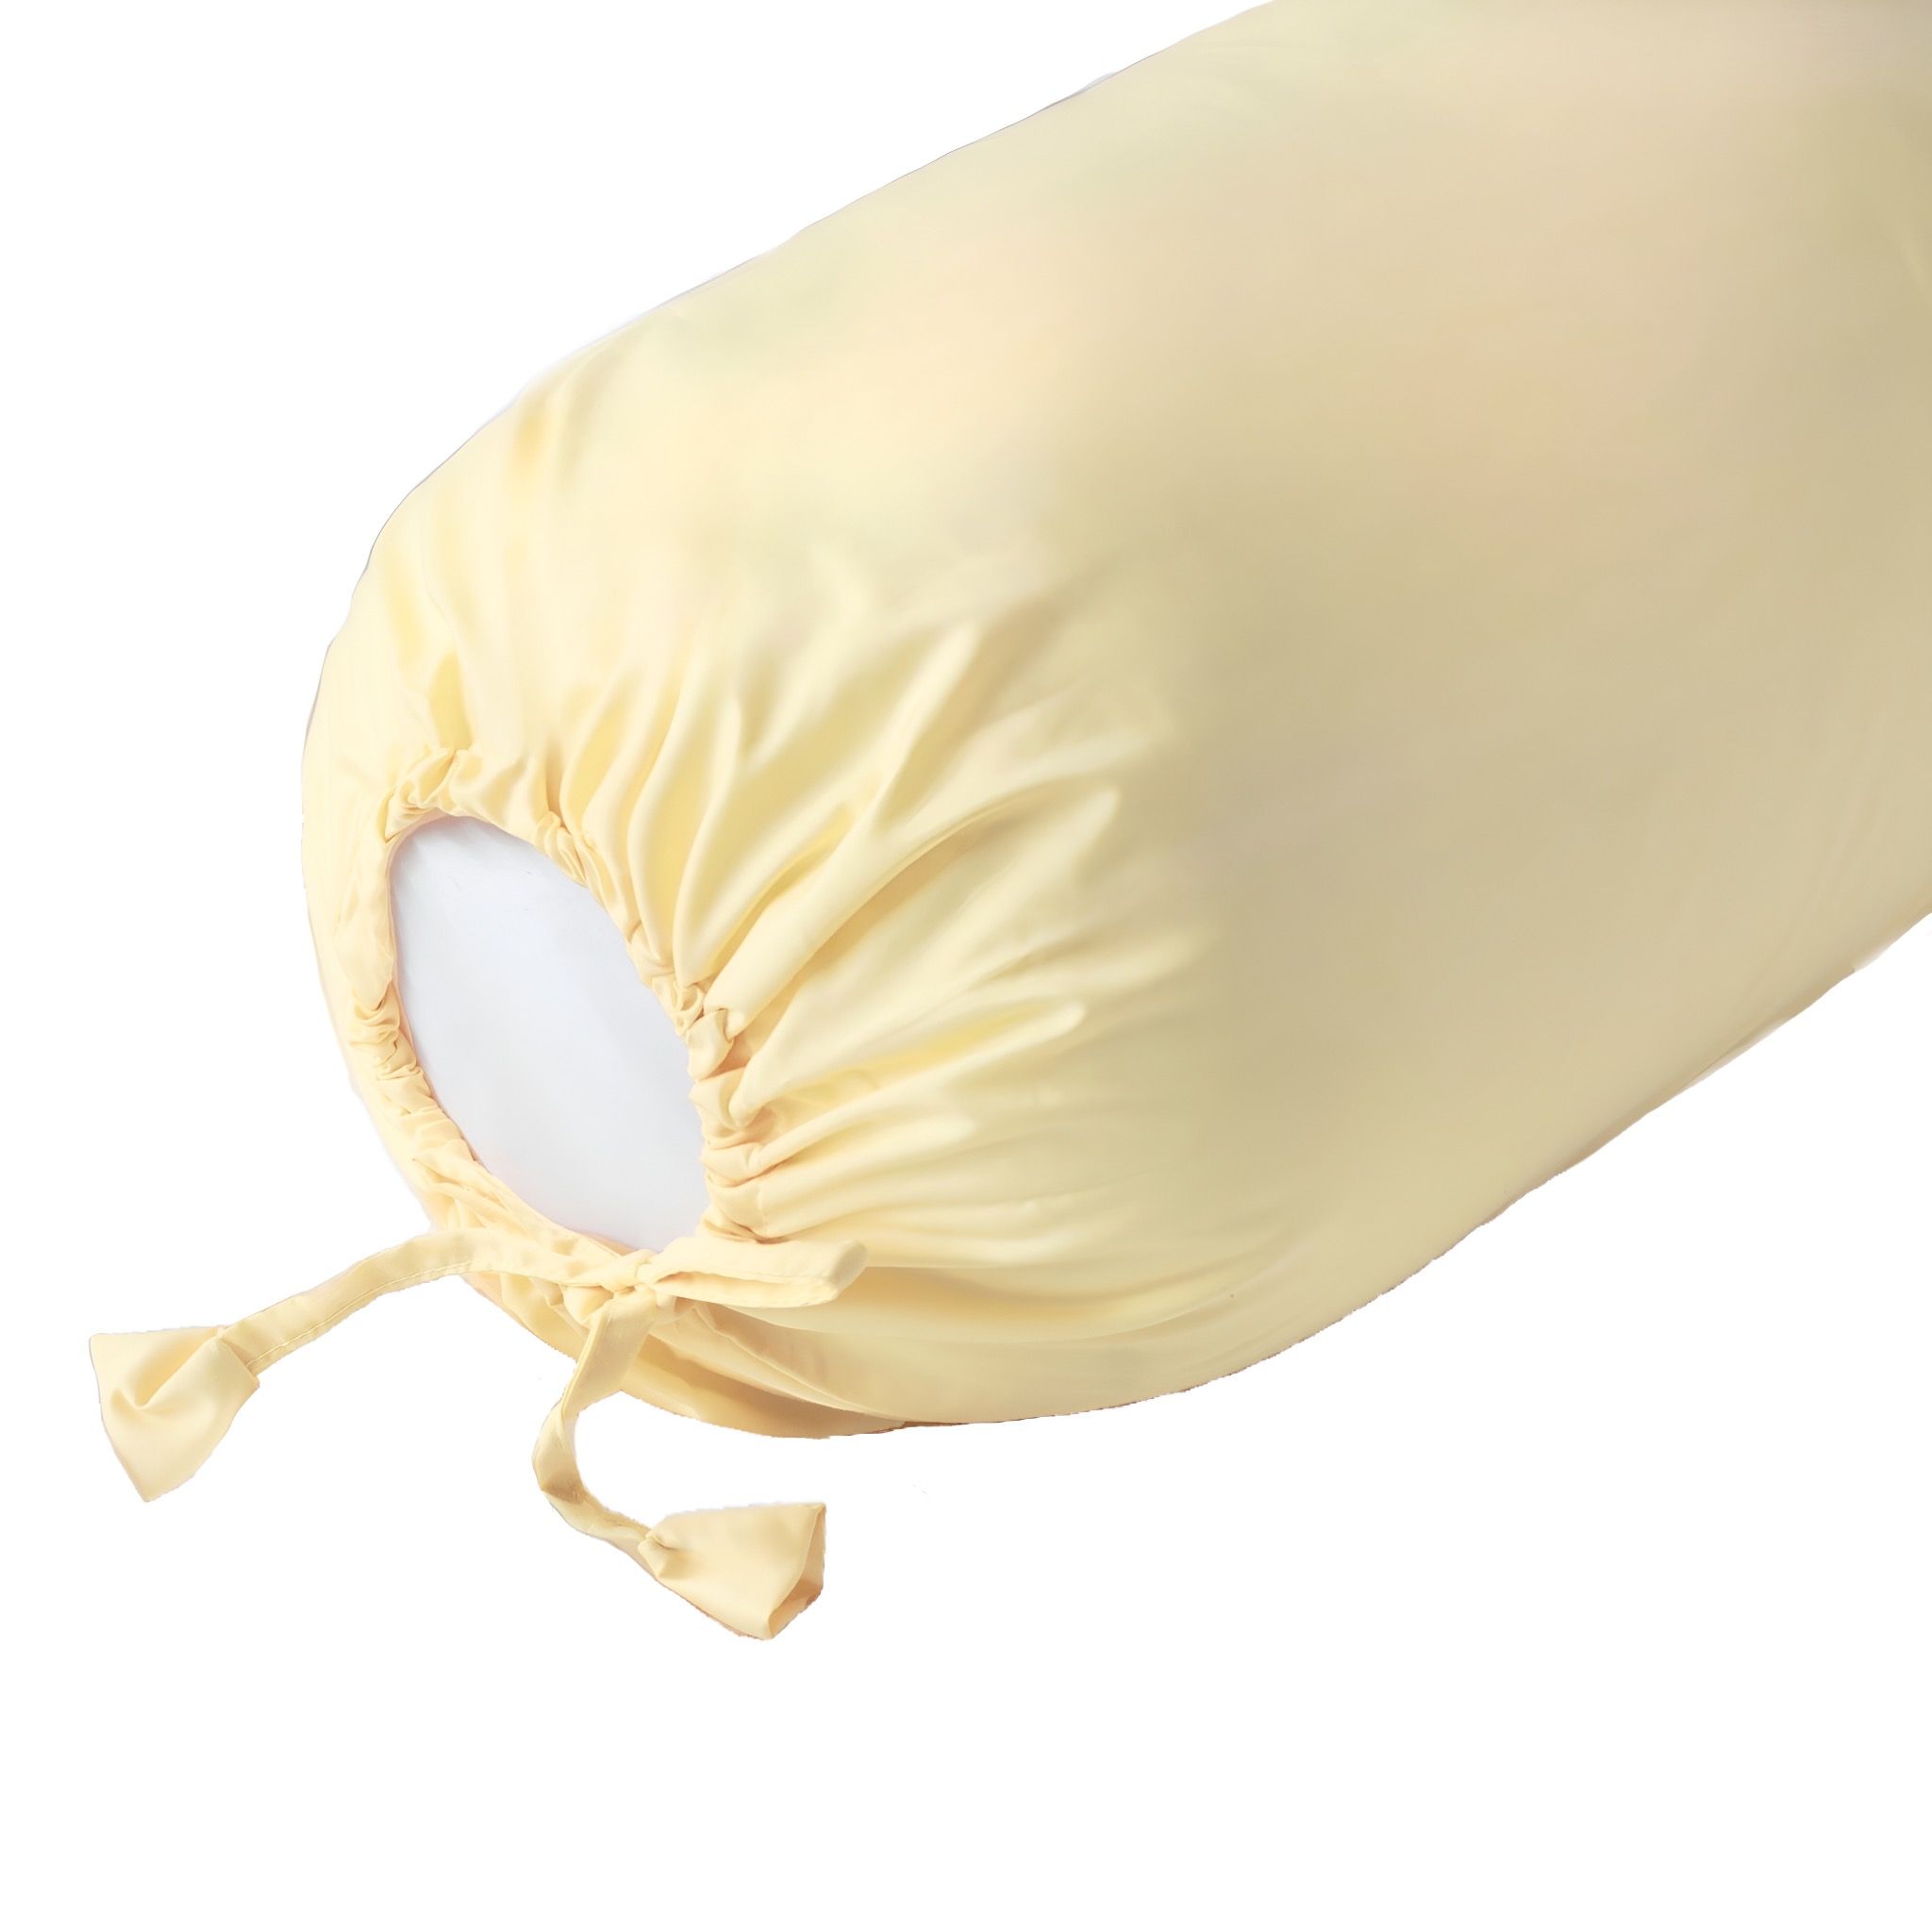  [SAMPLE] Vỏ gối ôm Premium Cotton 